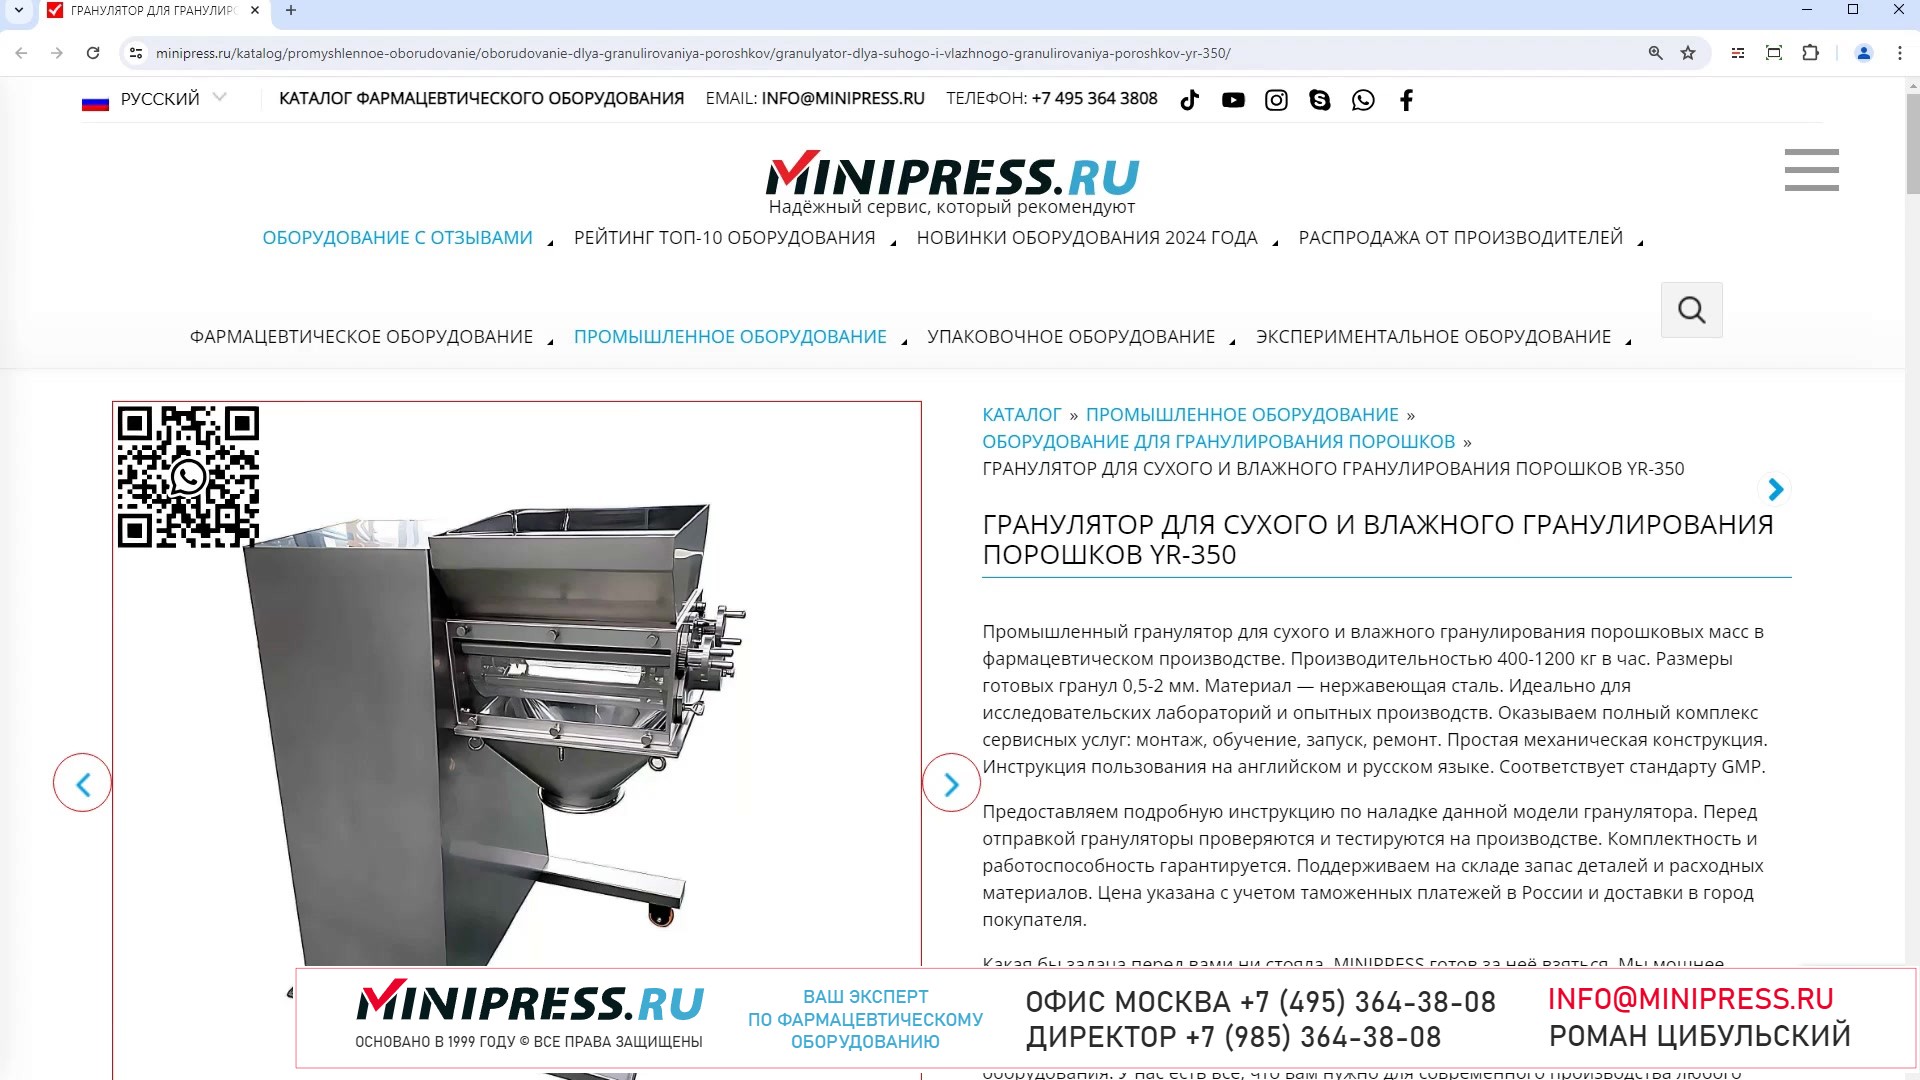 Minipress.ru Гранулятор для сухого и влажного гранулирования порошков YR-350